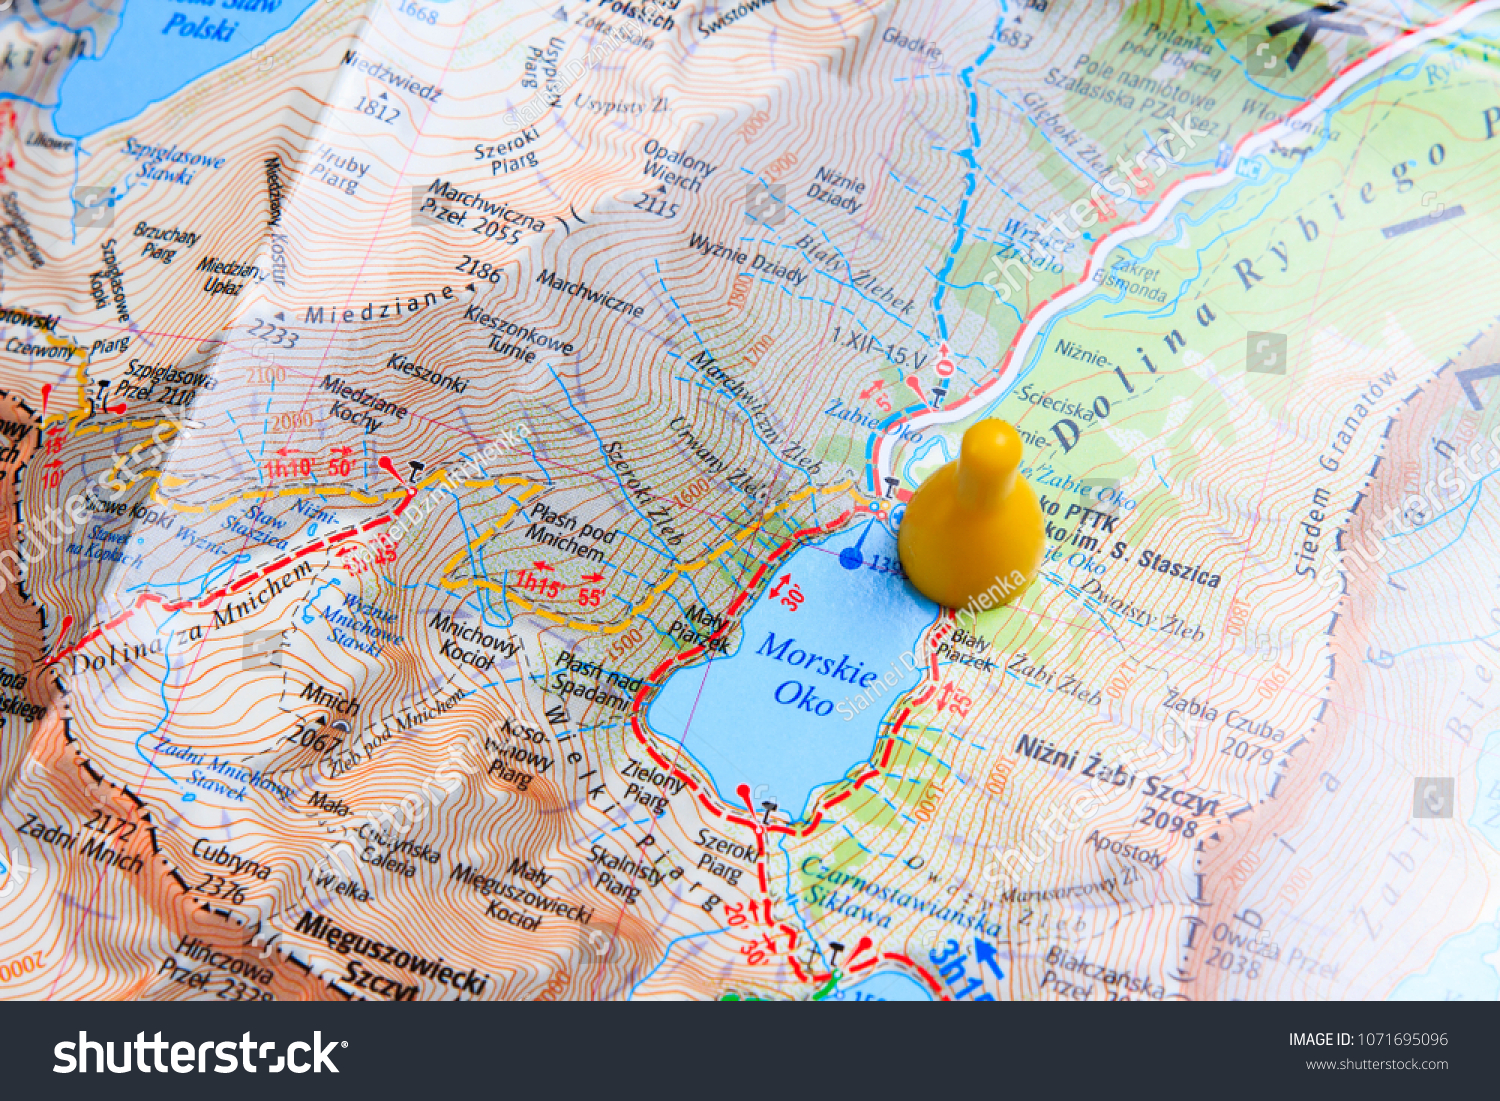 Map of Zakopane close up. Walking route through the mountains. Adventure and hiking on European routes #1071695096